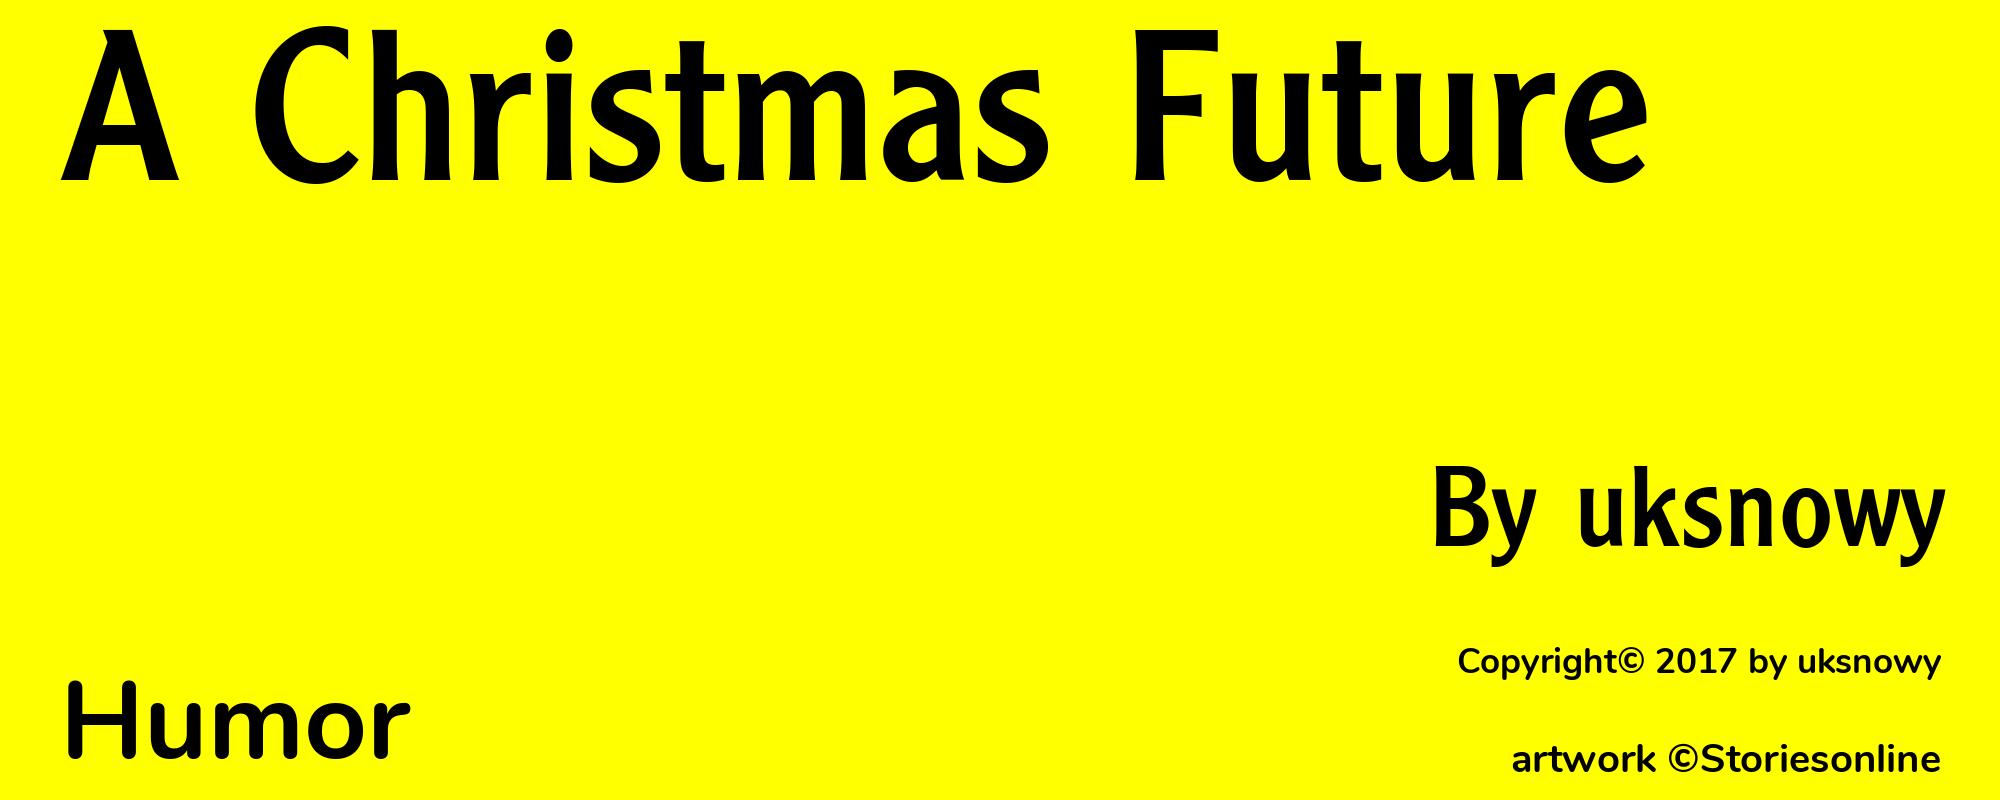 A Christmas Future - Cover